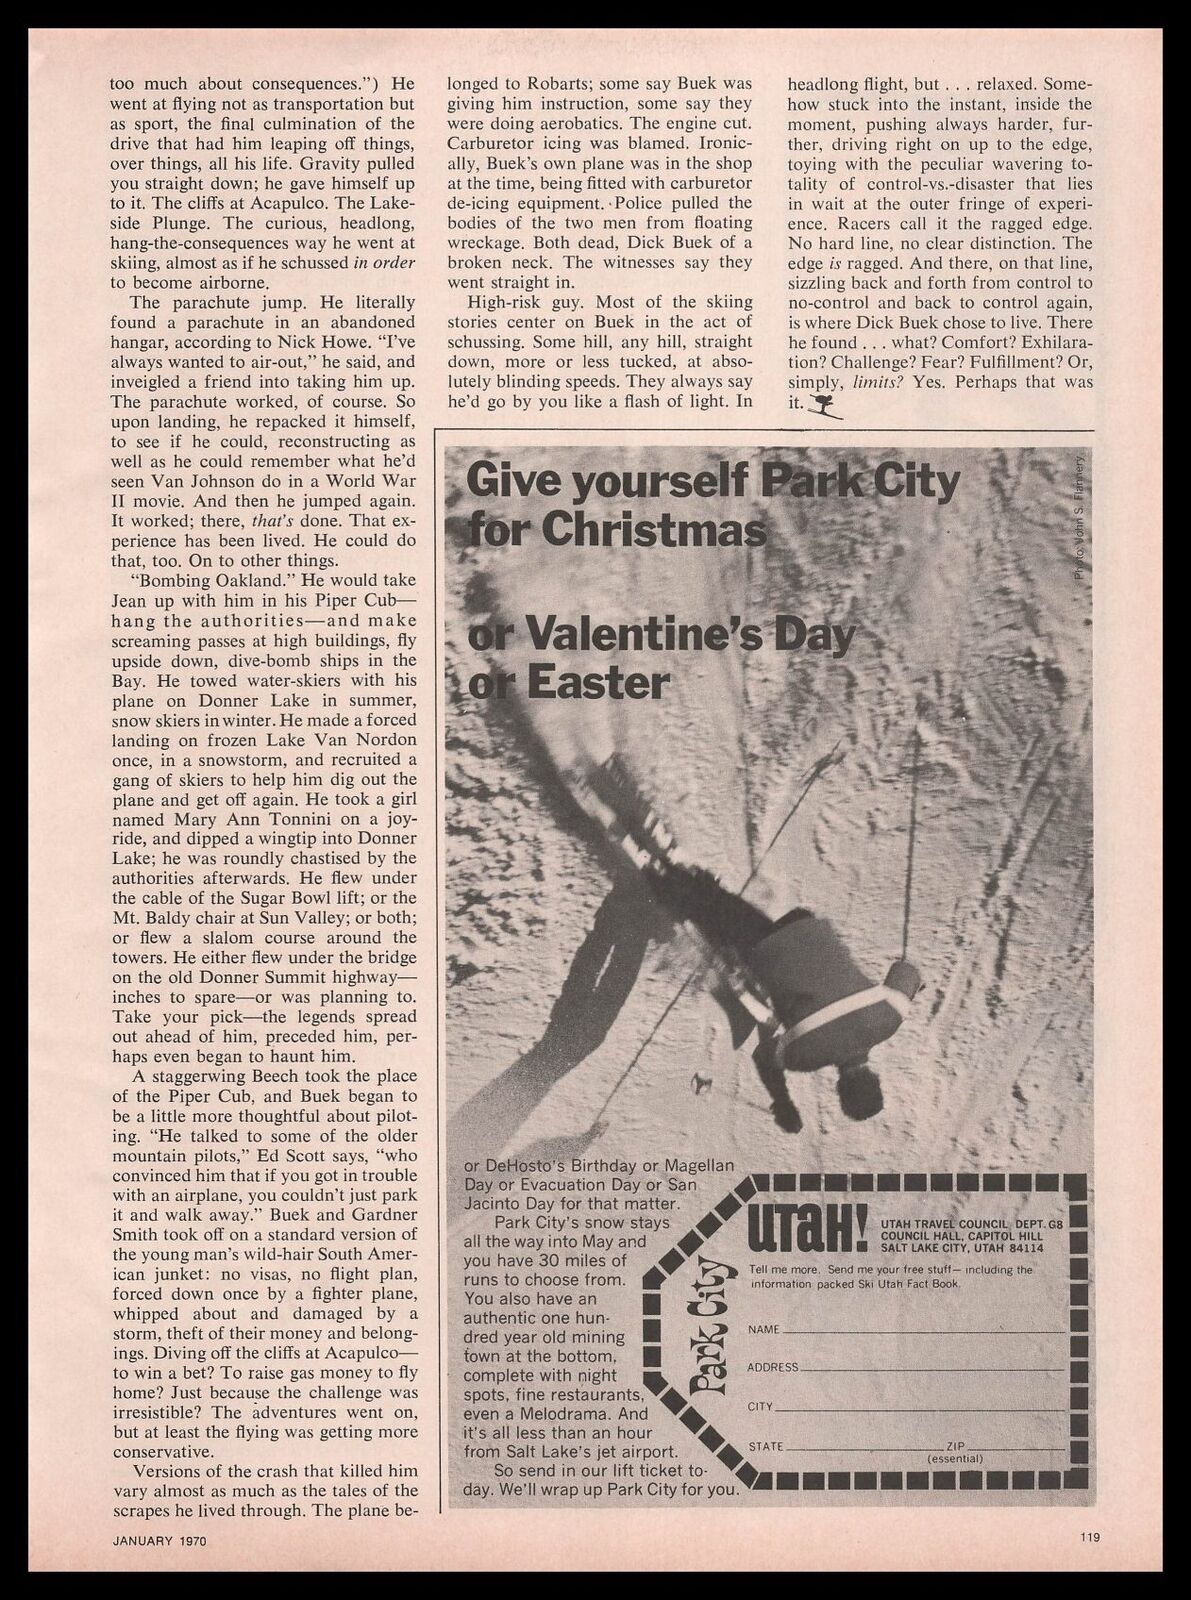 1970 Utah "give Yourself Park City For Christmas" Snow Ski Area Vintage Print Ad